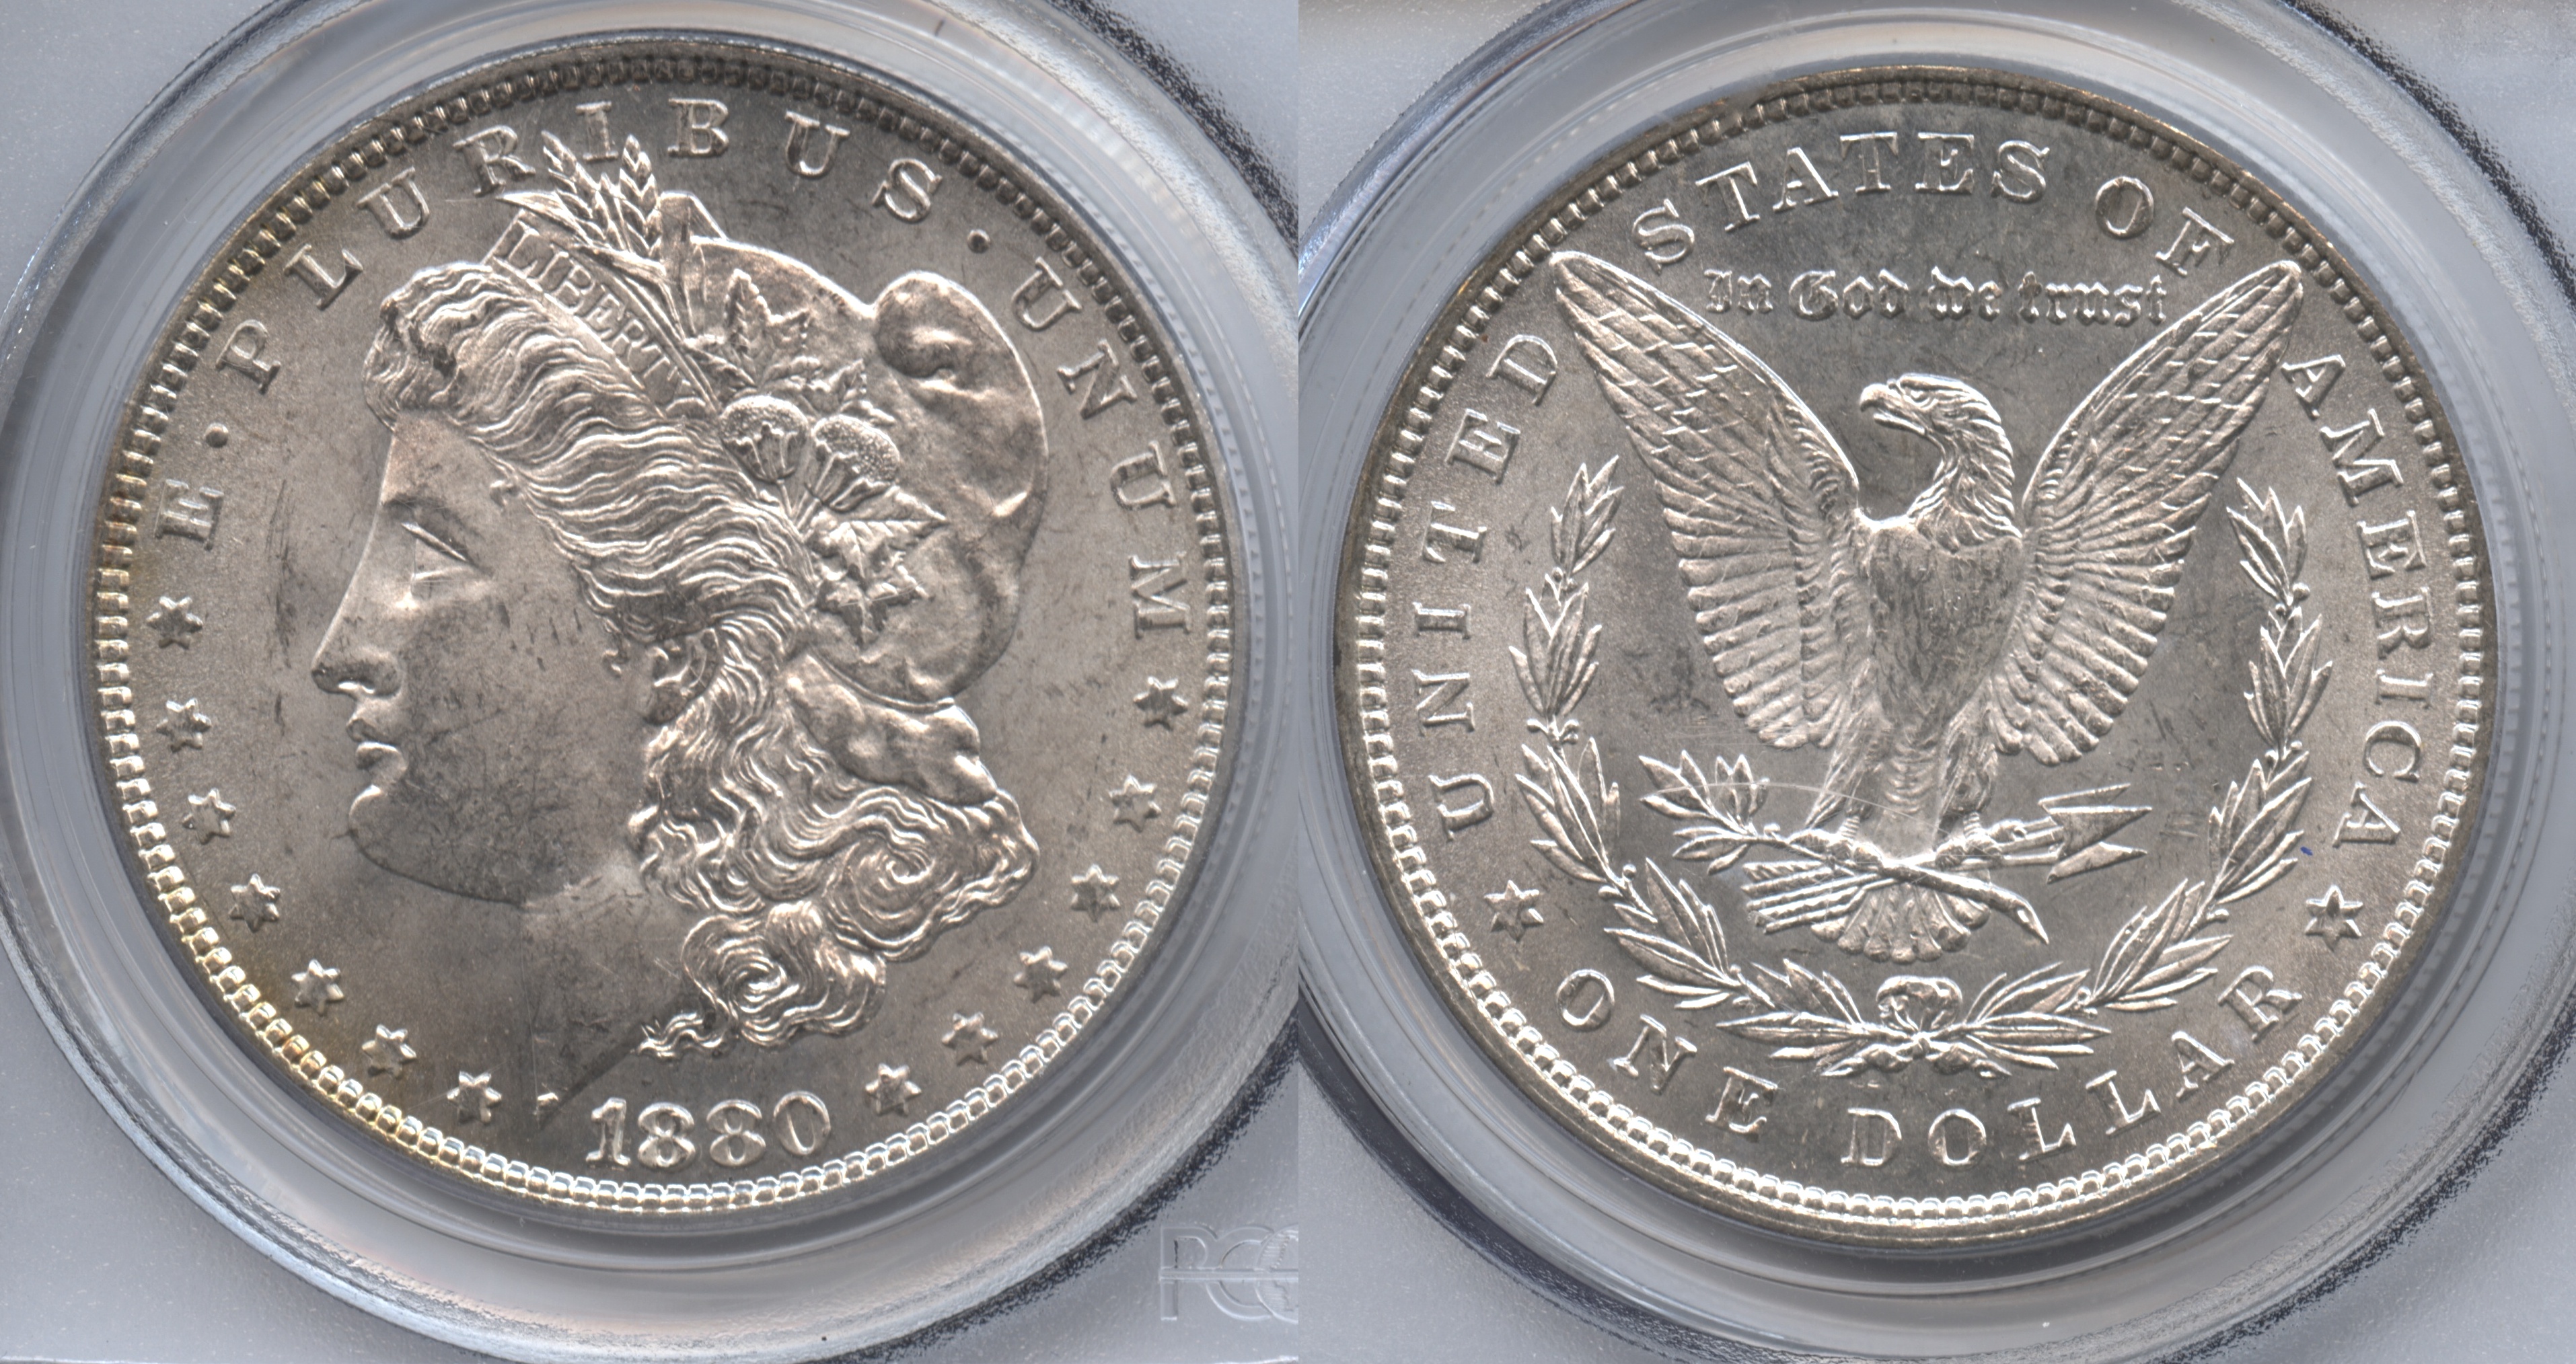 1880 Morgan Silver Dollar PCGS MS-64